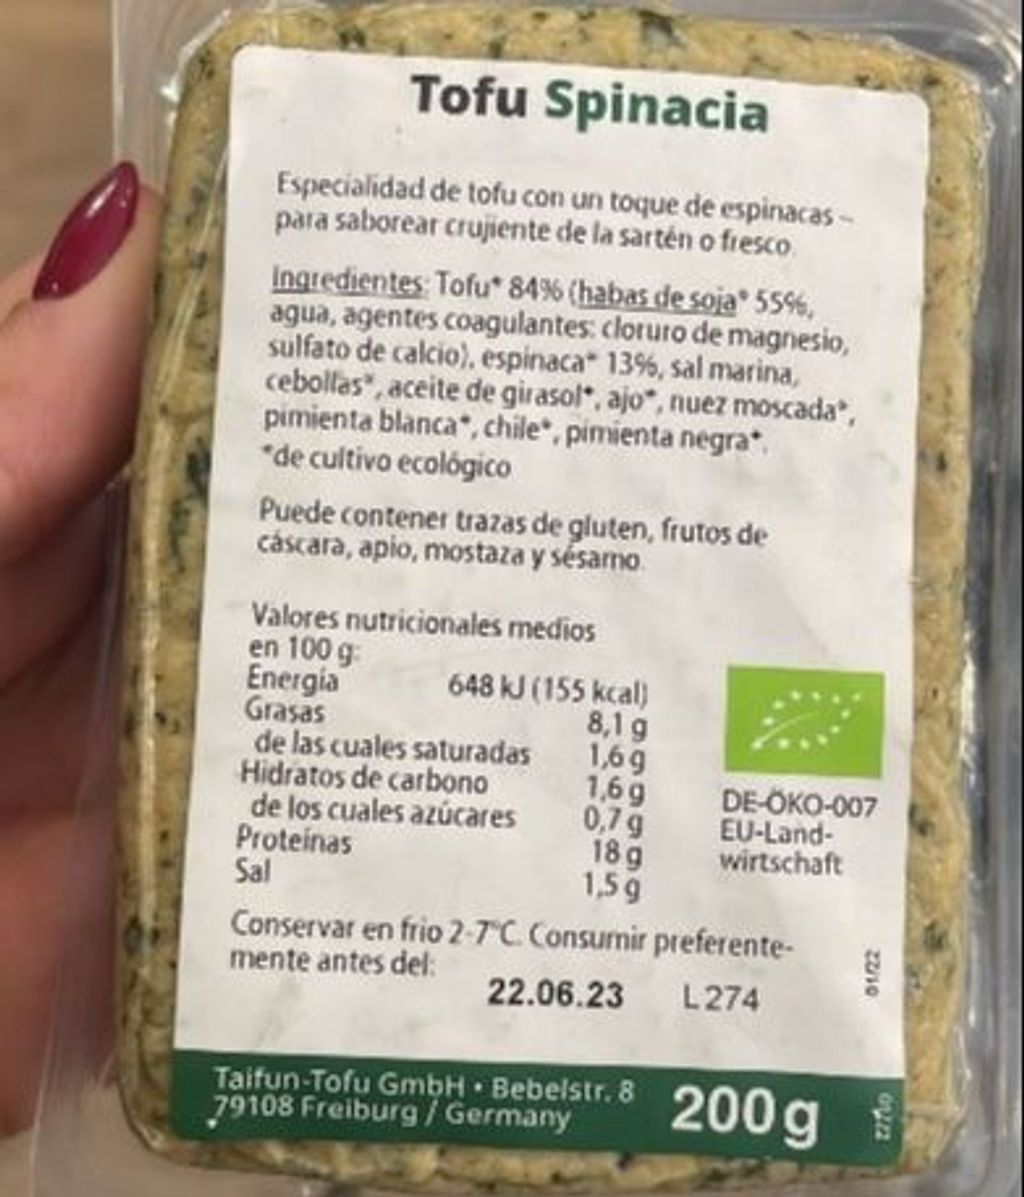 Alerta alimentaria: piden no consumir este tofu por presencia de fragmentos metálicos